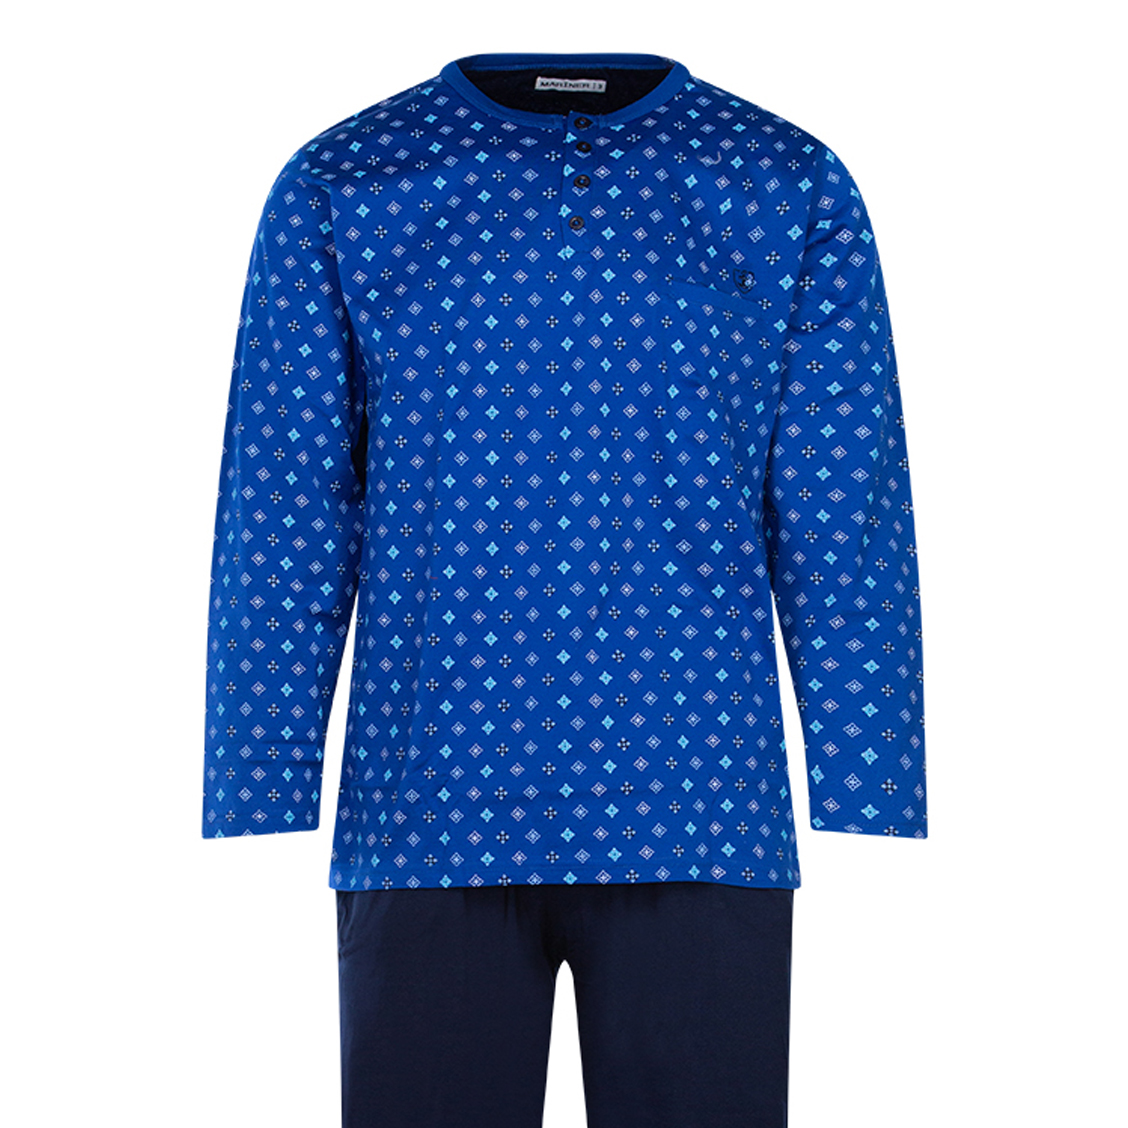 Pyjama long Mariner en coton : tee-shirt manches longues bleu indigo à micro motifs multicolores et 